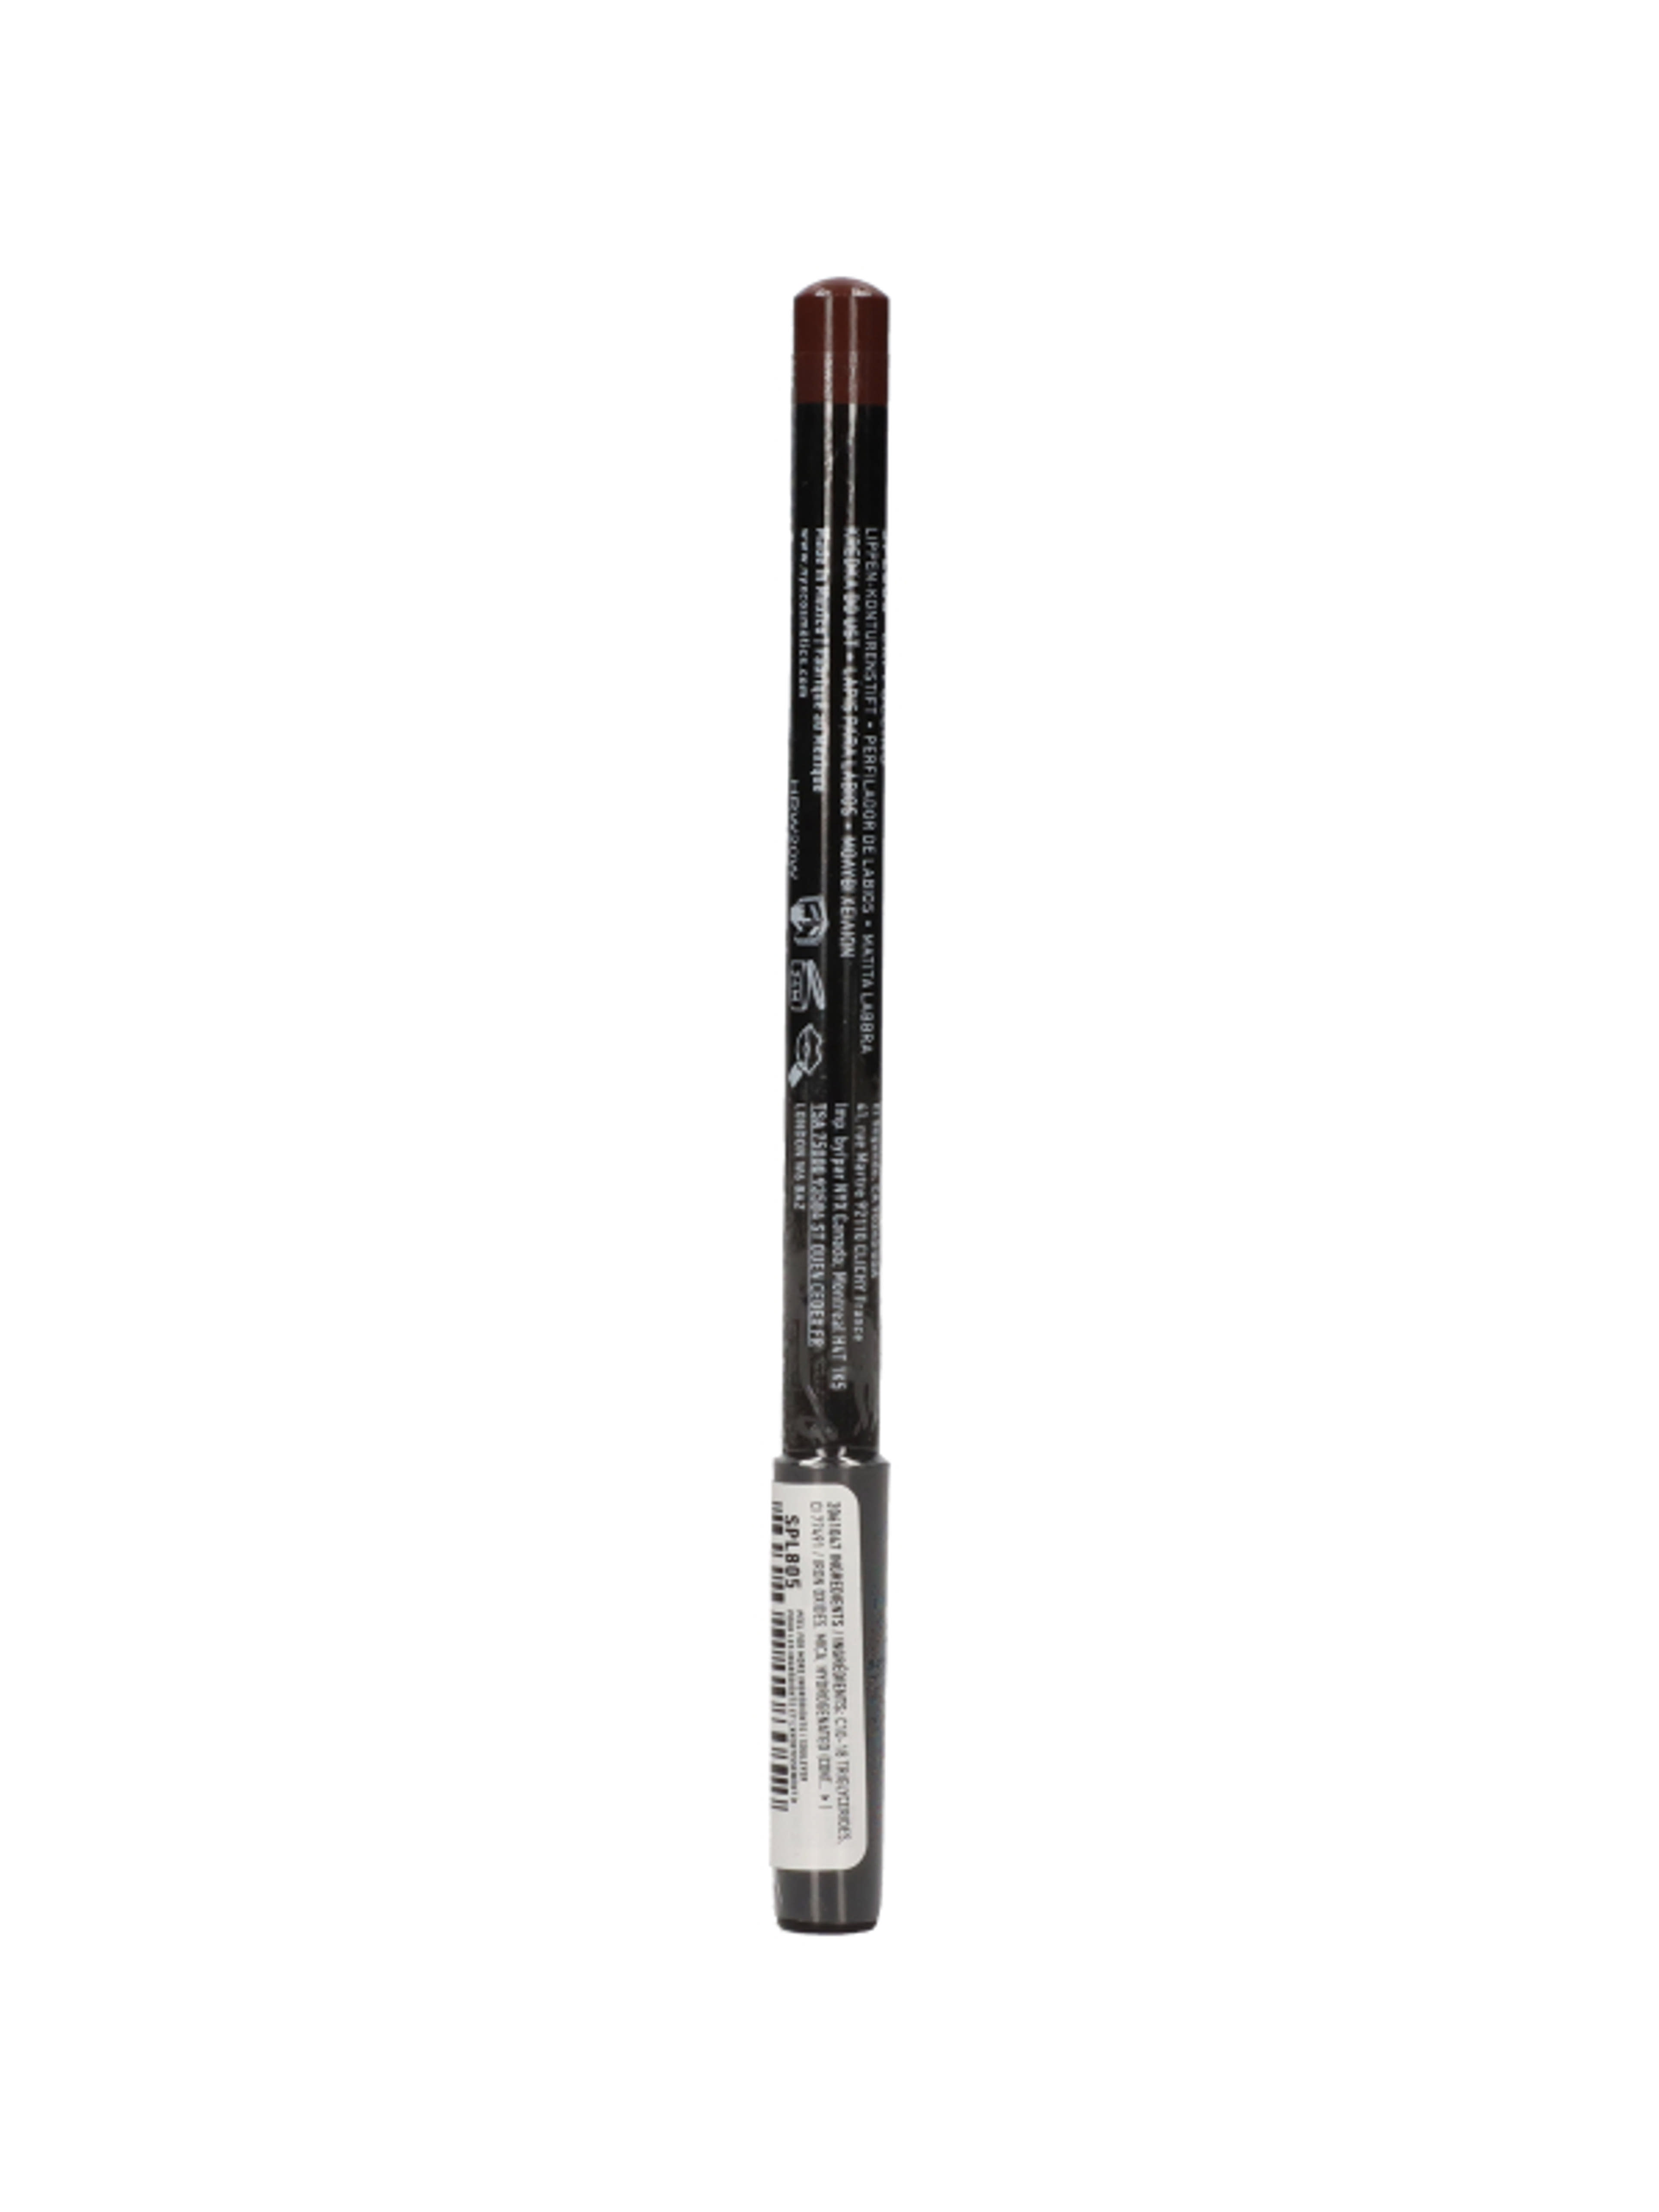 NYX Professional Makeup Slim Lip Pencil ajakkontúr ceruza, Capuccino - 1 db-5